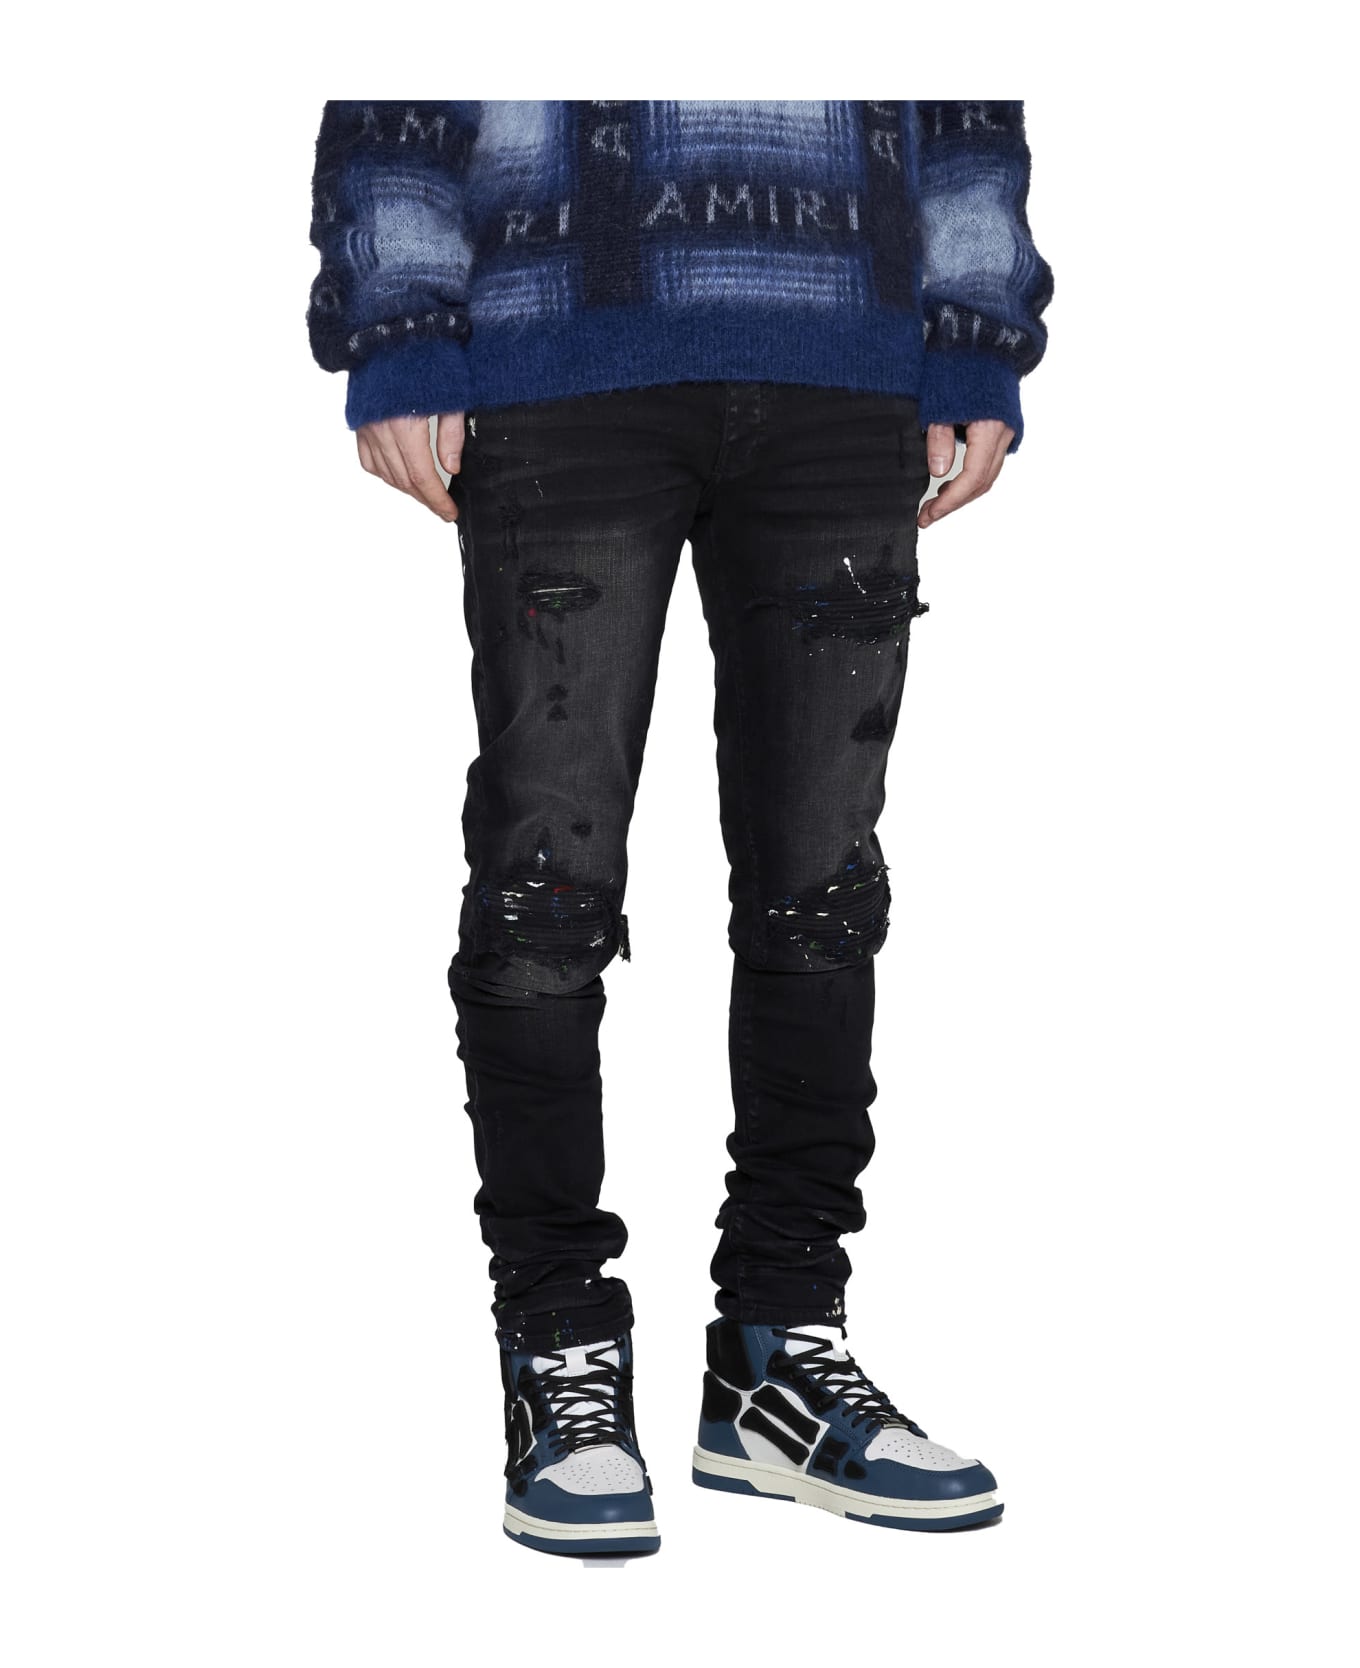 AMIRI Jeans - Aged black